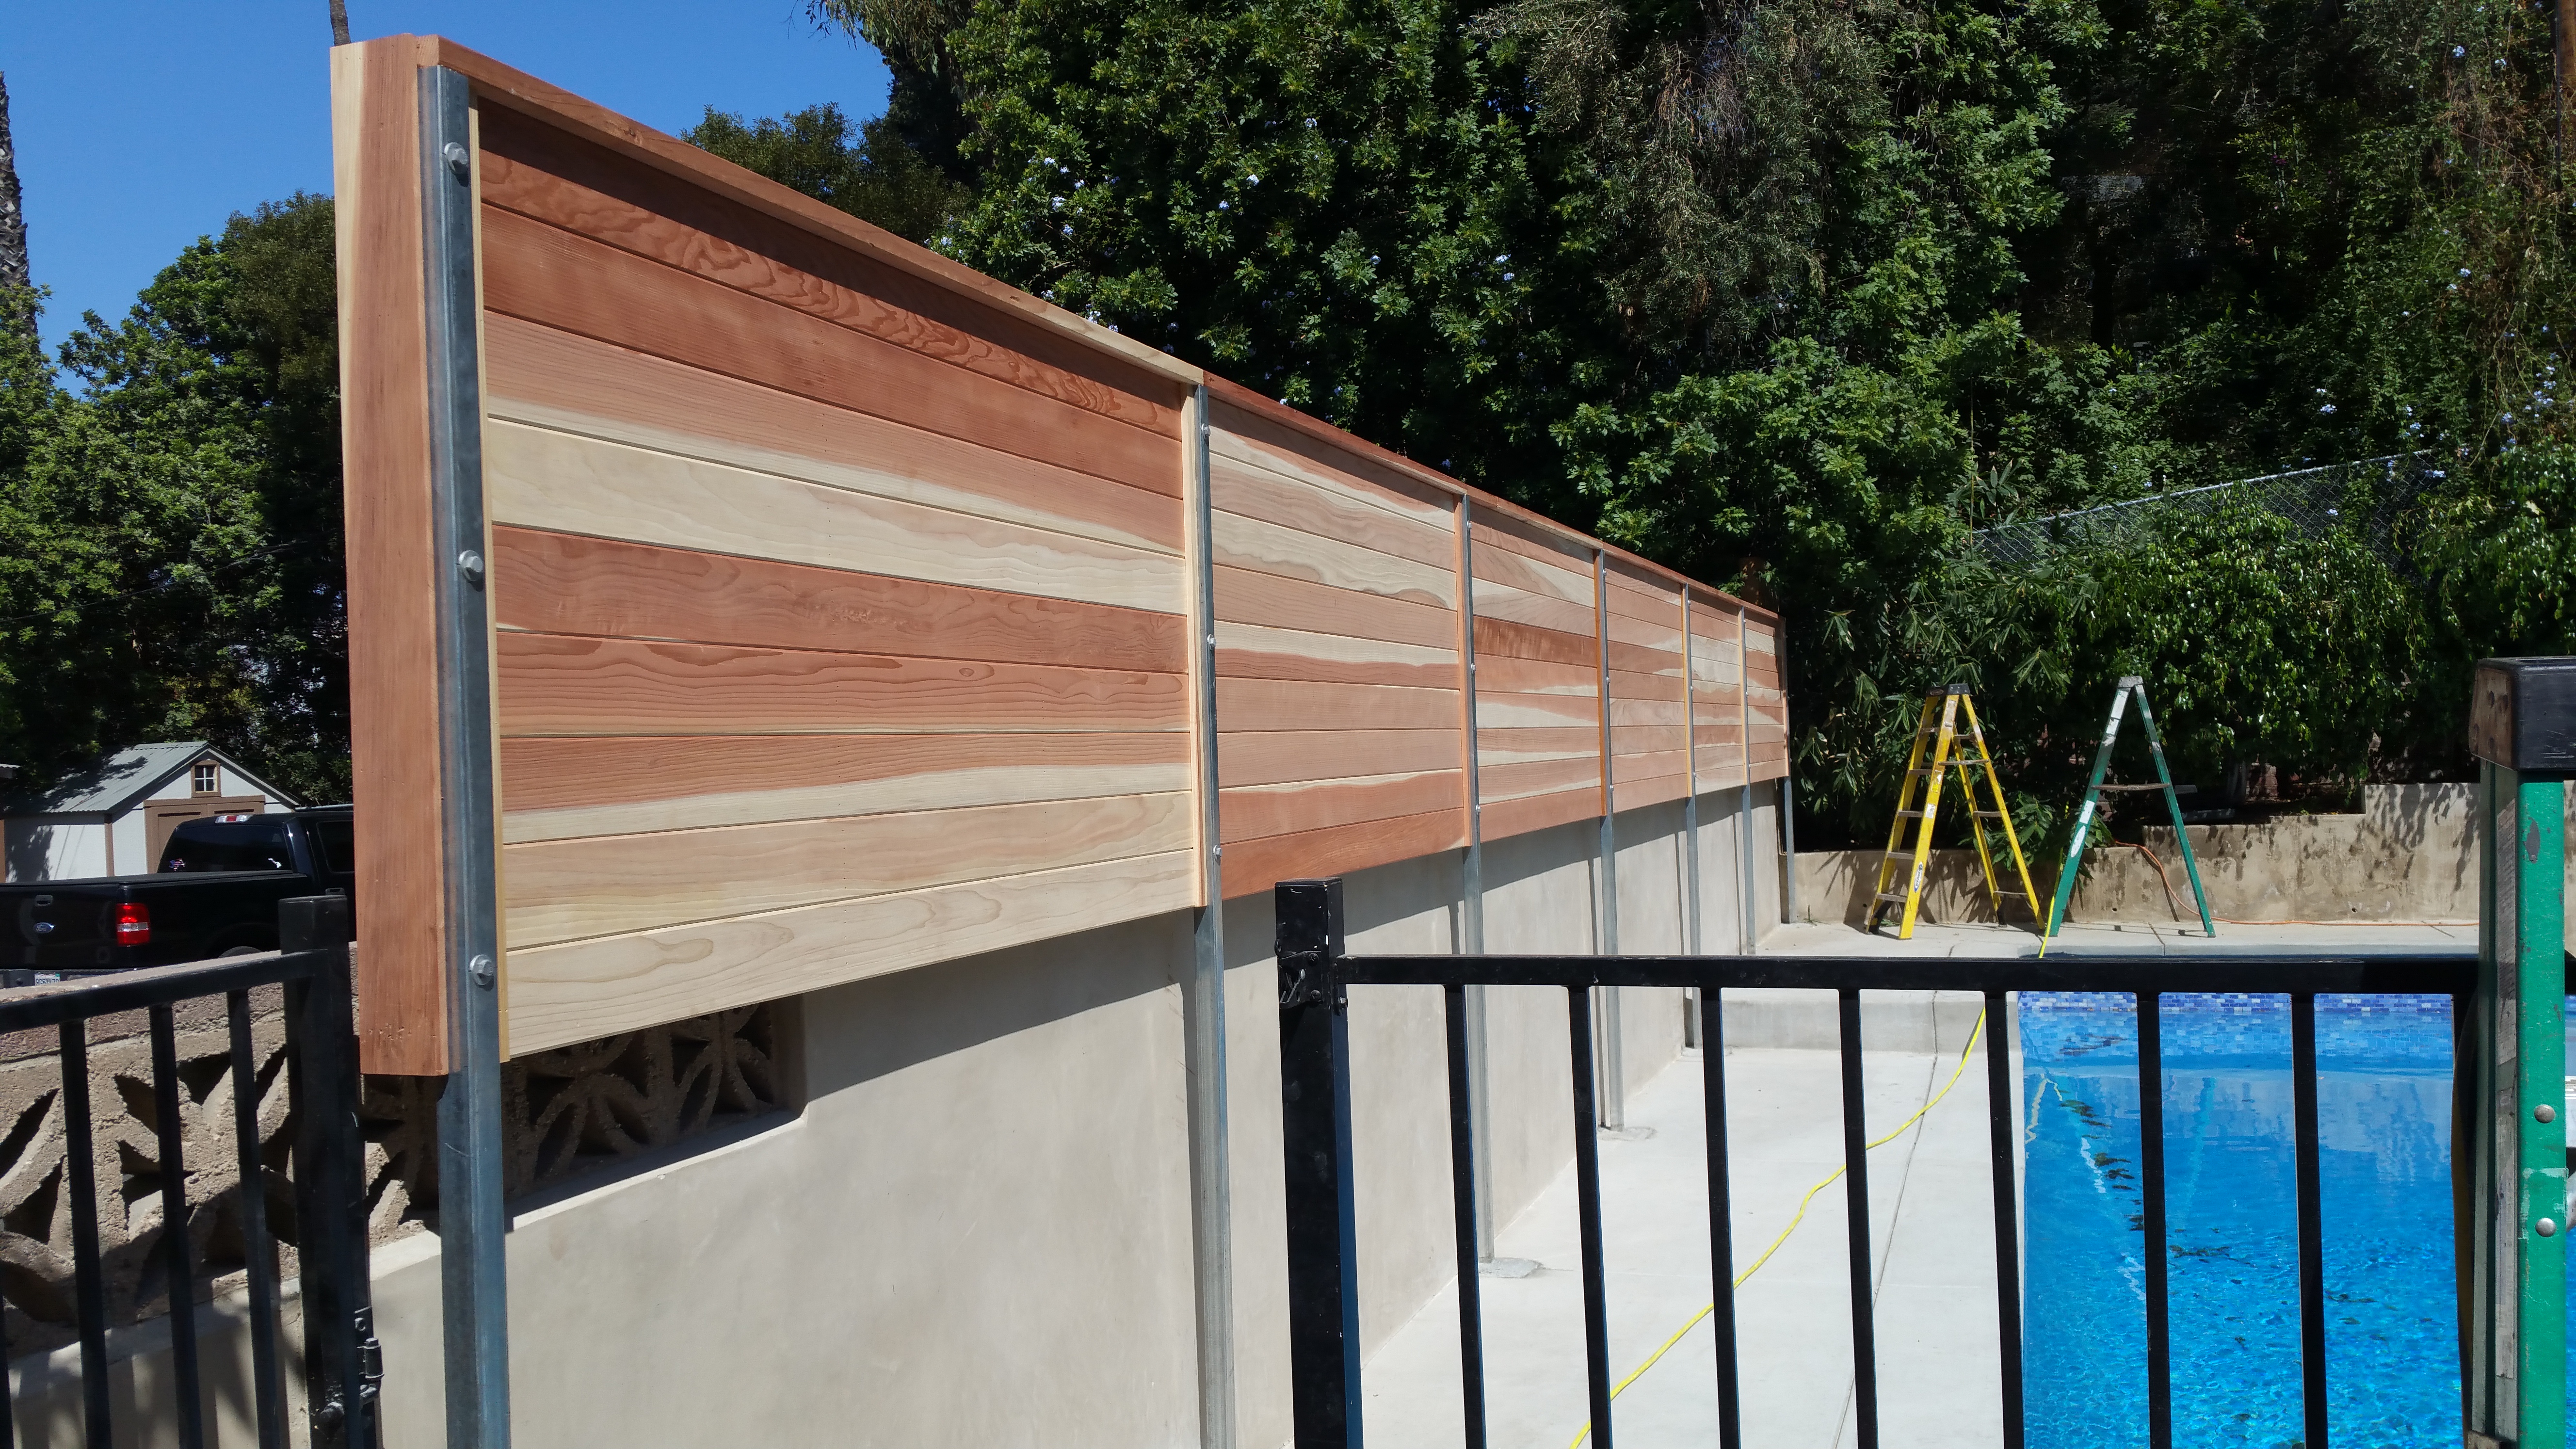 Custom Horizontal Floating Wood Privacy Fence Los Angeles 90027 Built